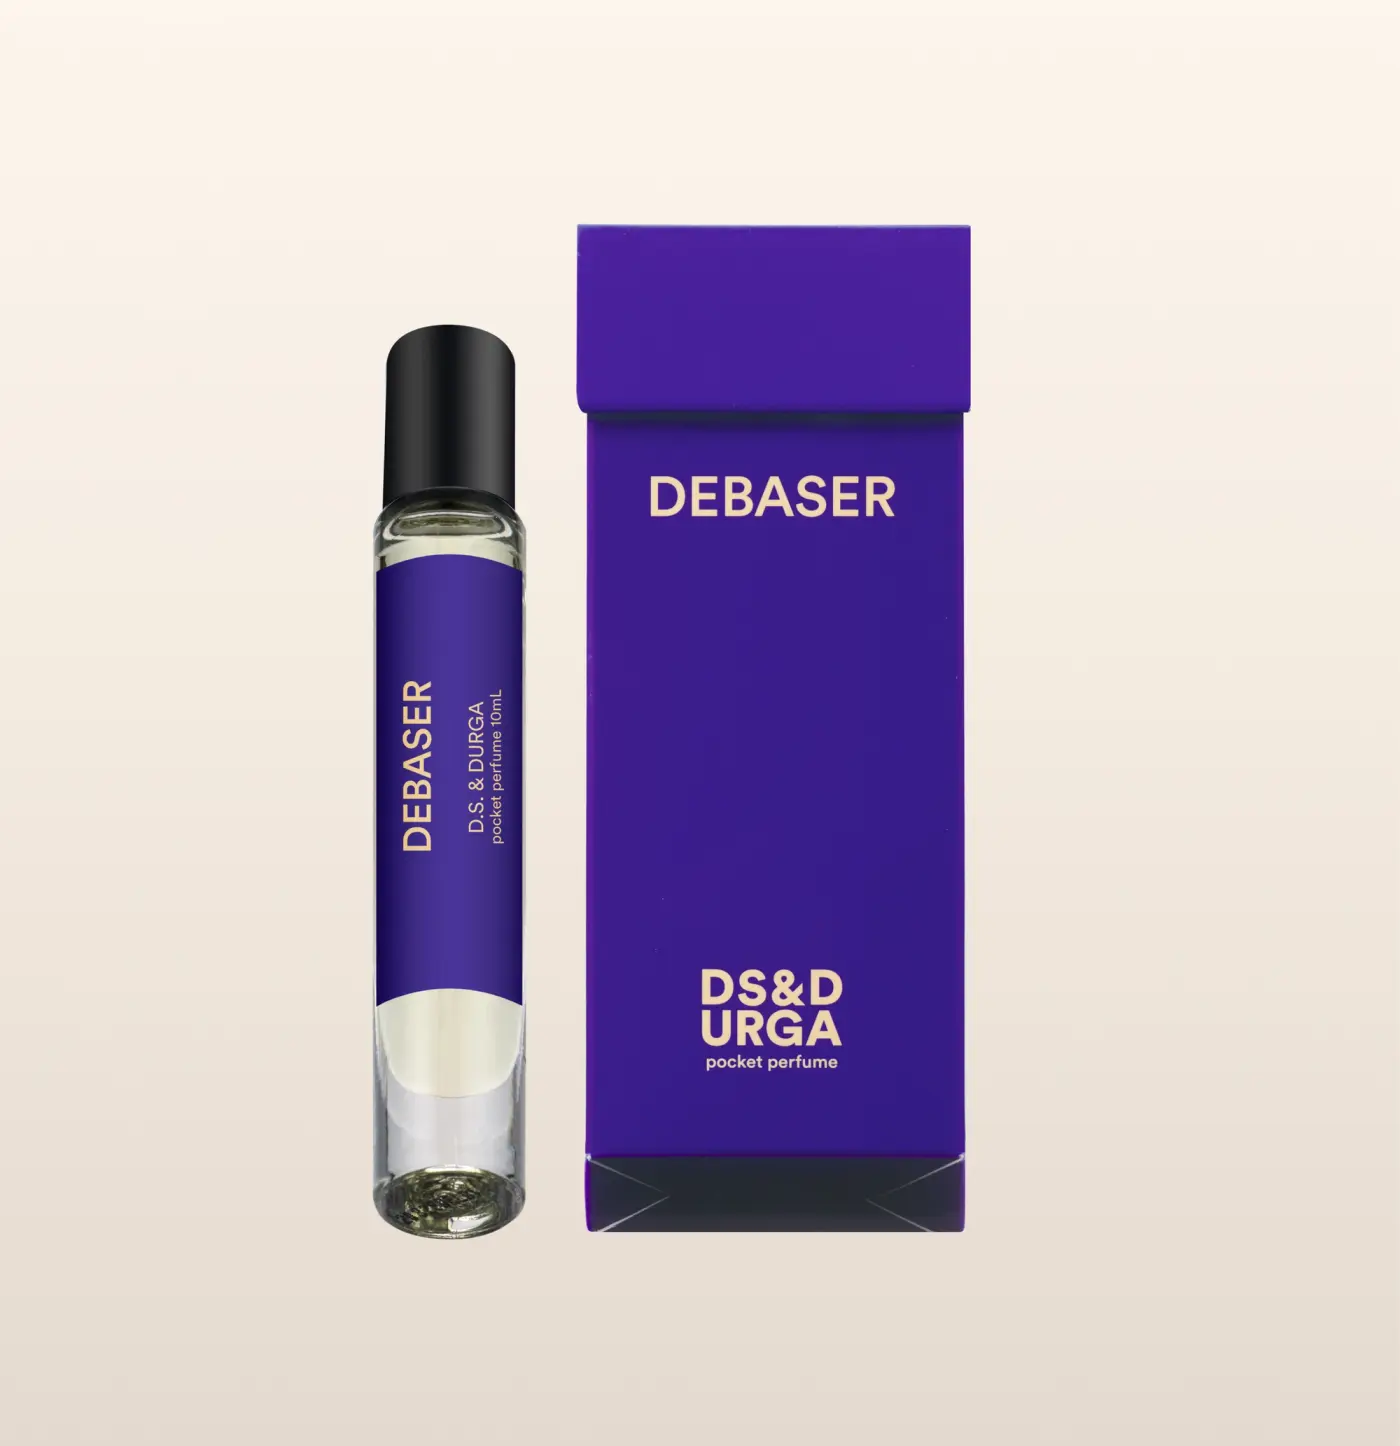 Debaser Pocket Perfume by D.S. & Durga